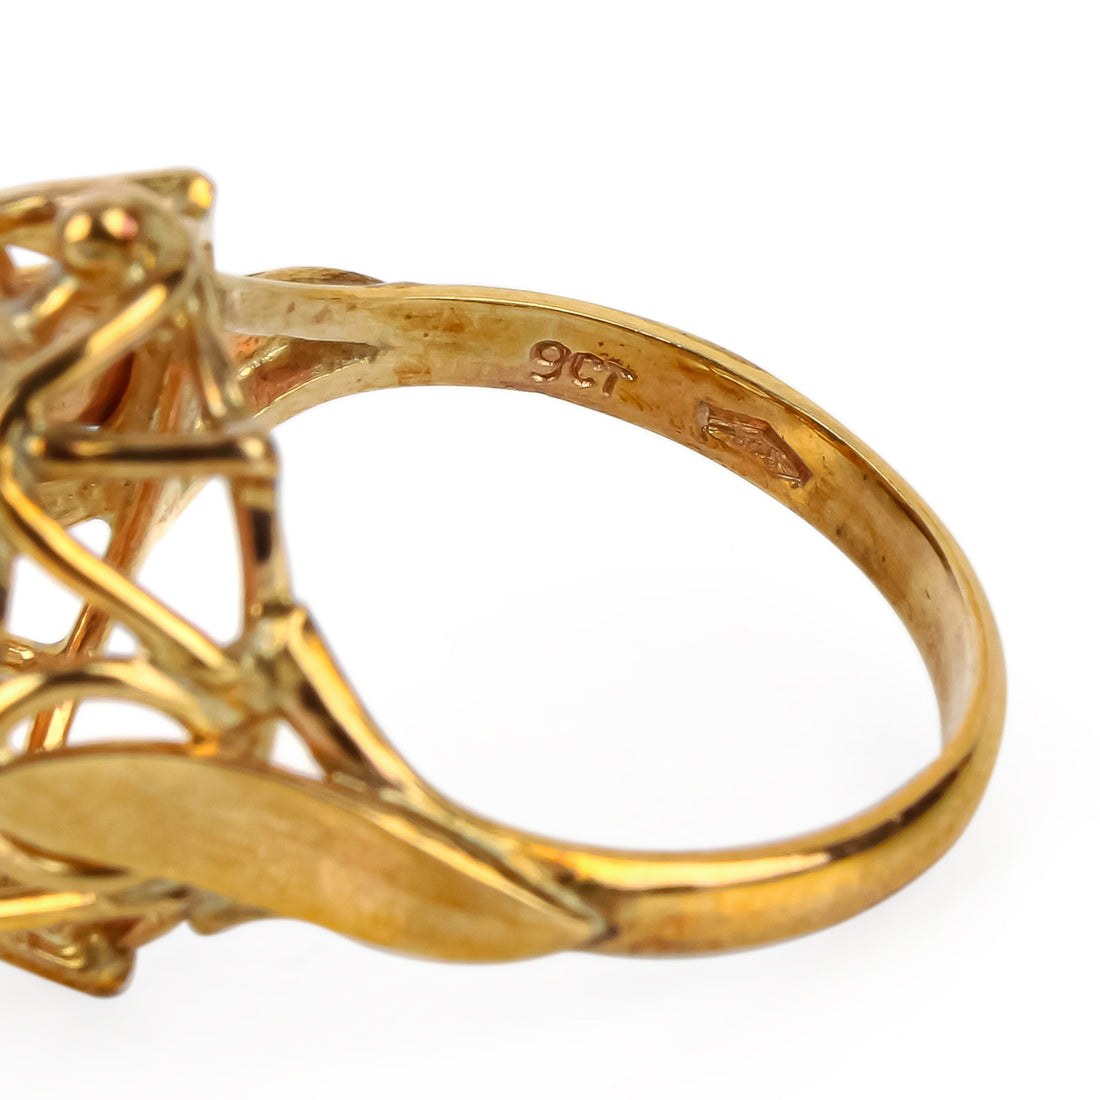 9K Yellow Gold Oval Sapphire & Diamond Ring